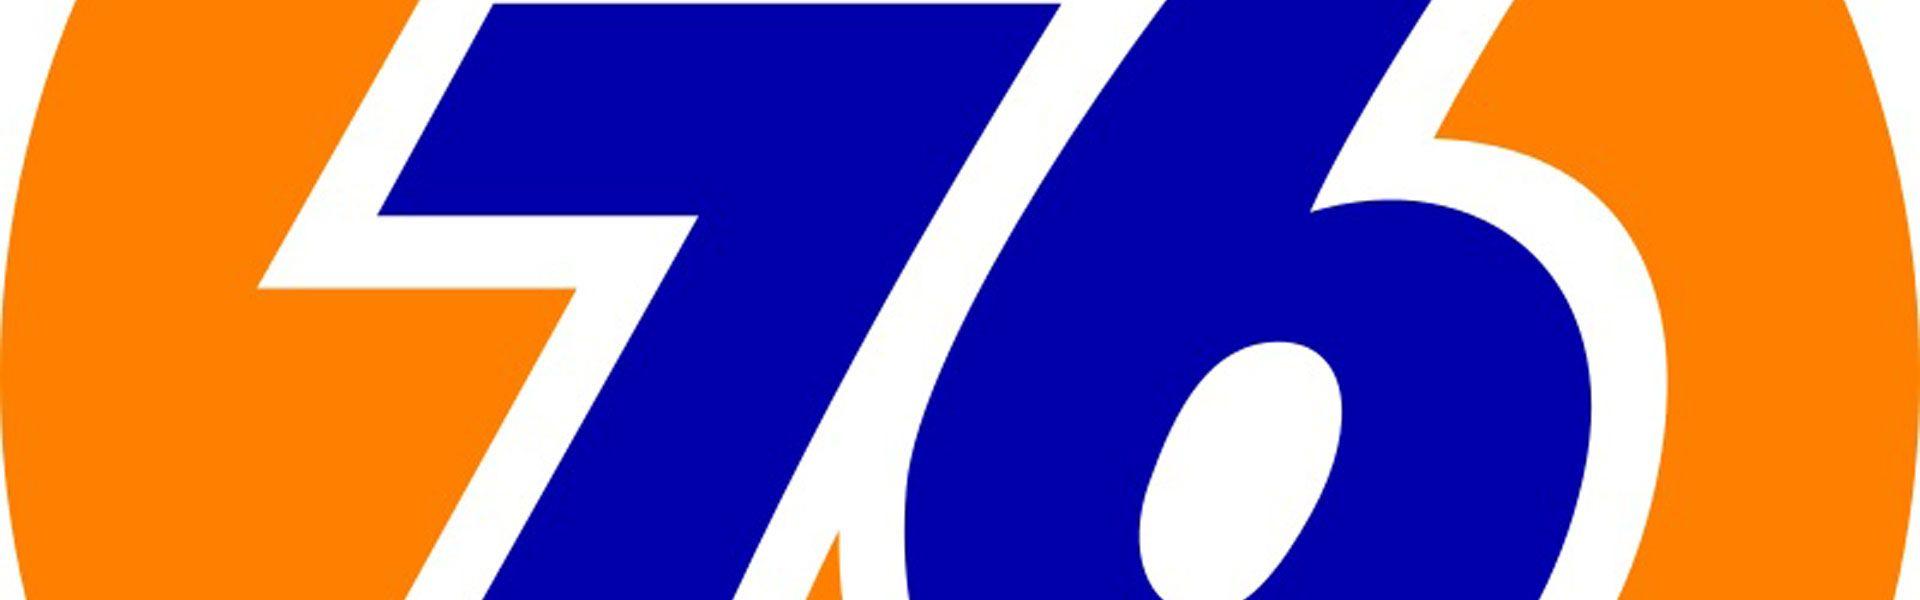 76 Logo - Motiva Prepares 76 Brand Launch